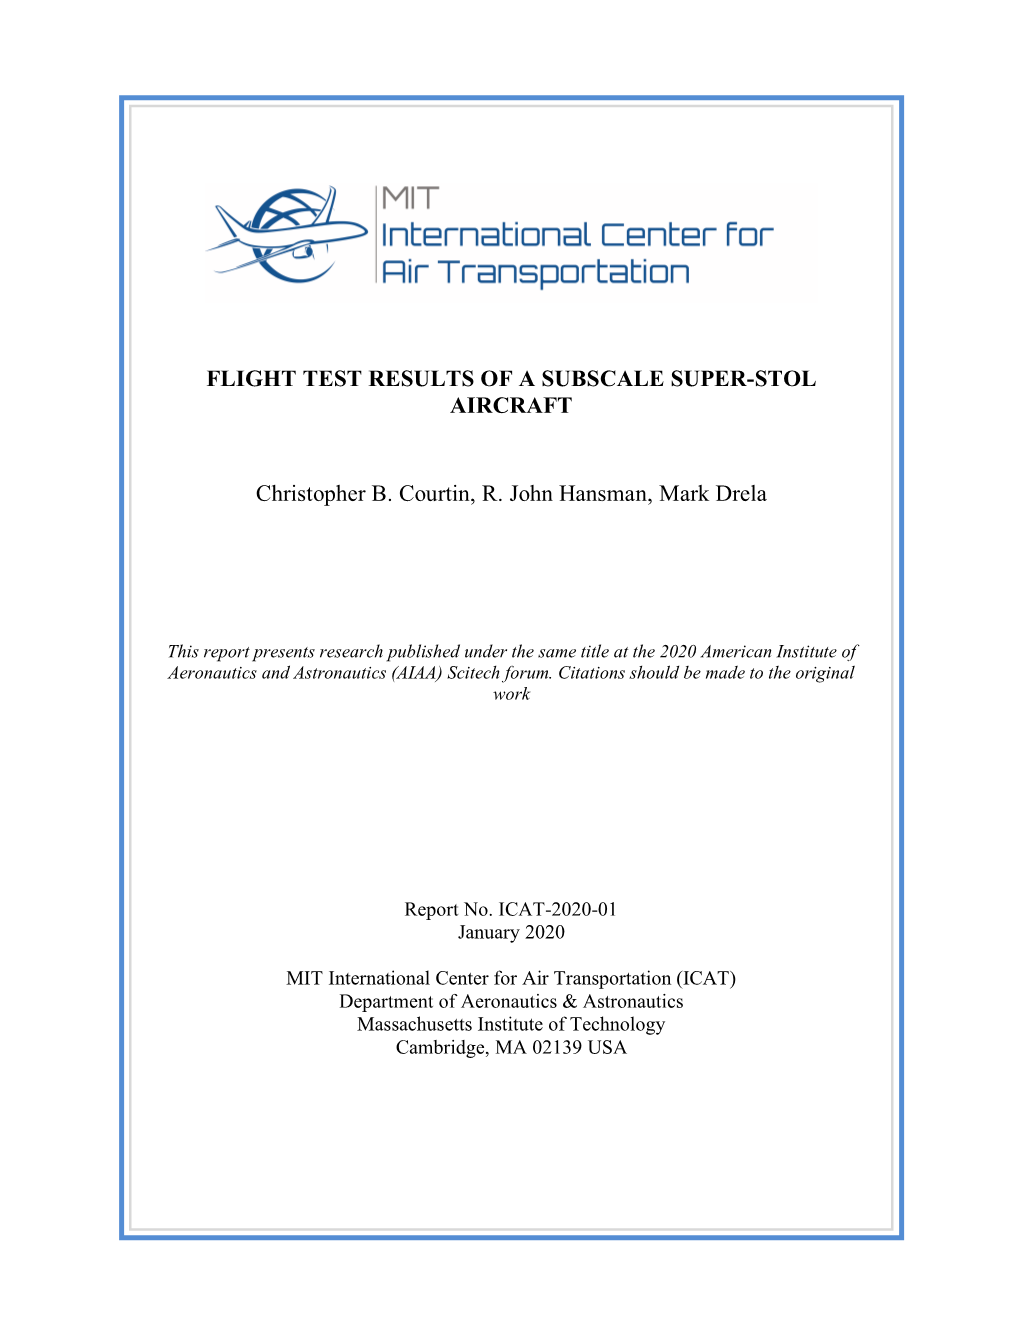 FLIGHT TEST RESULTS of a SUBSCALE SUPER-STOL AIRCRAFT Christopher B. Courtin, R. John Hansman, Mark Drela